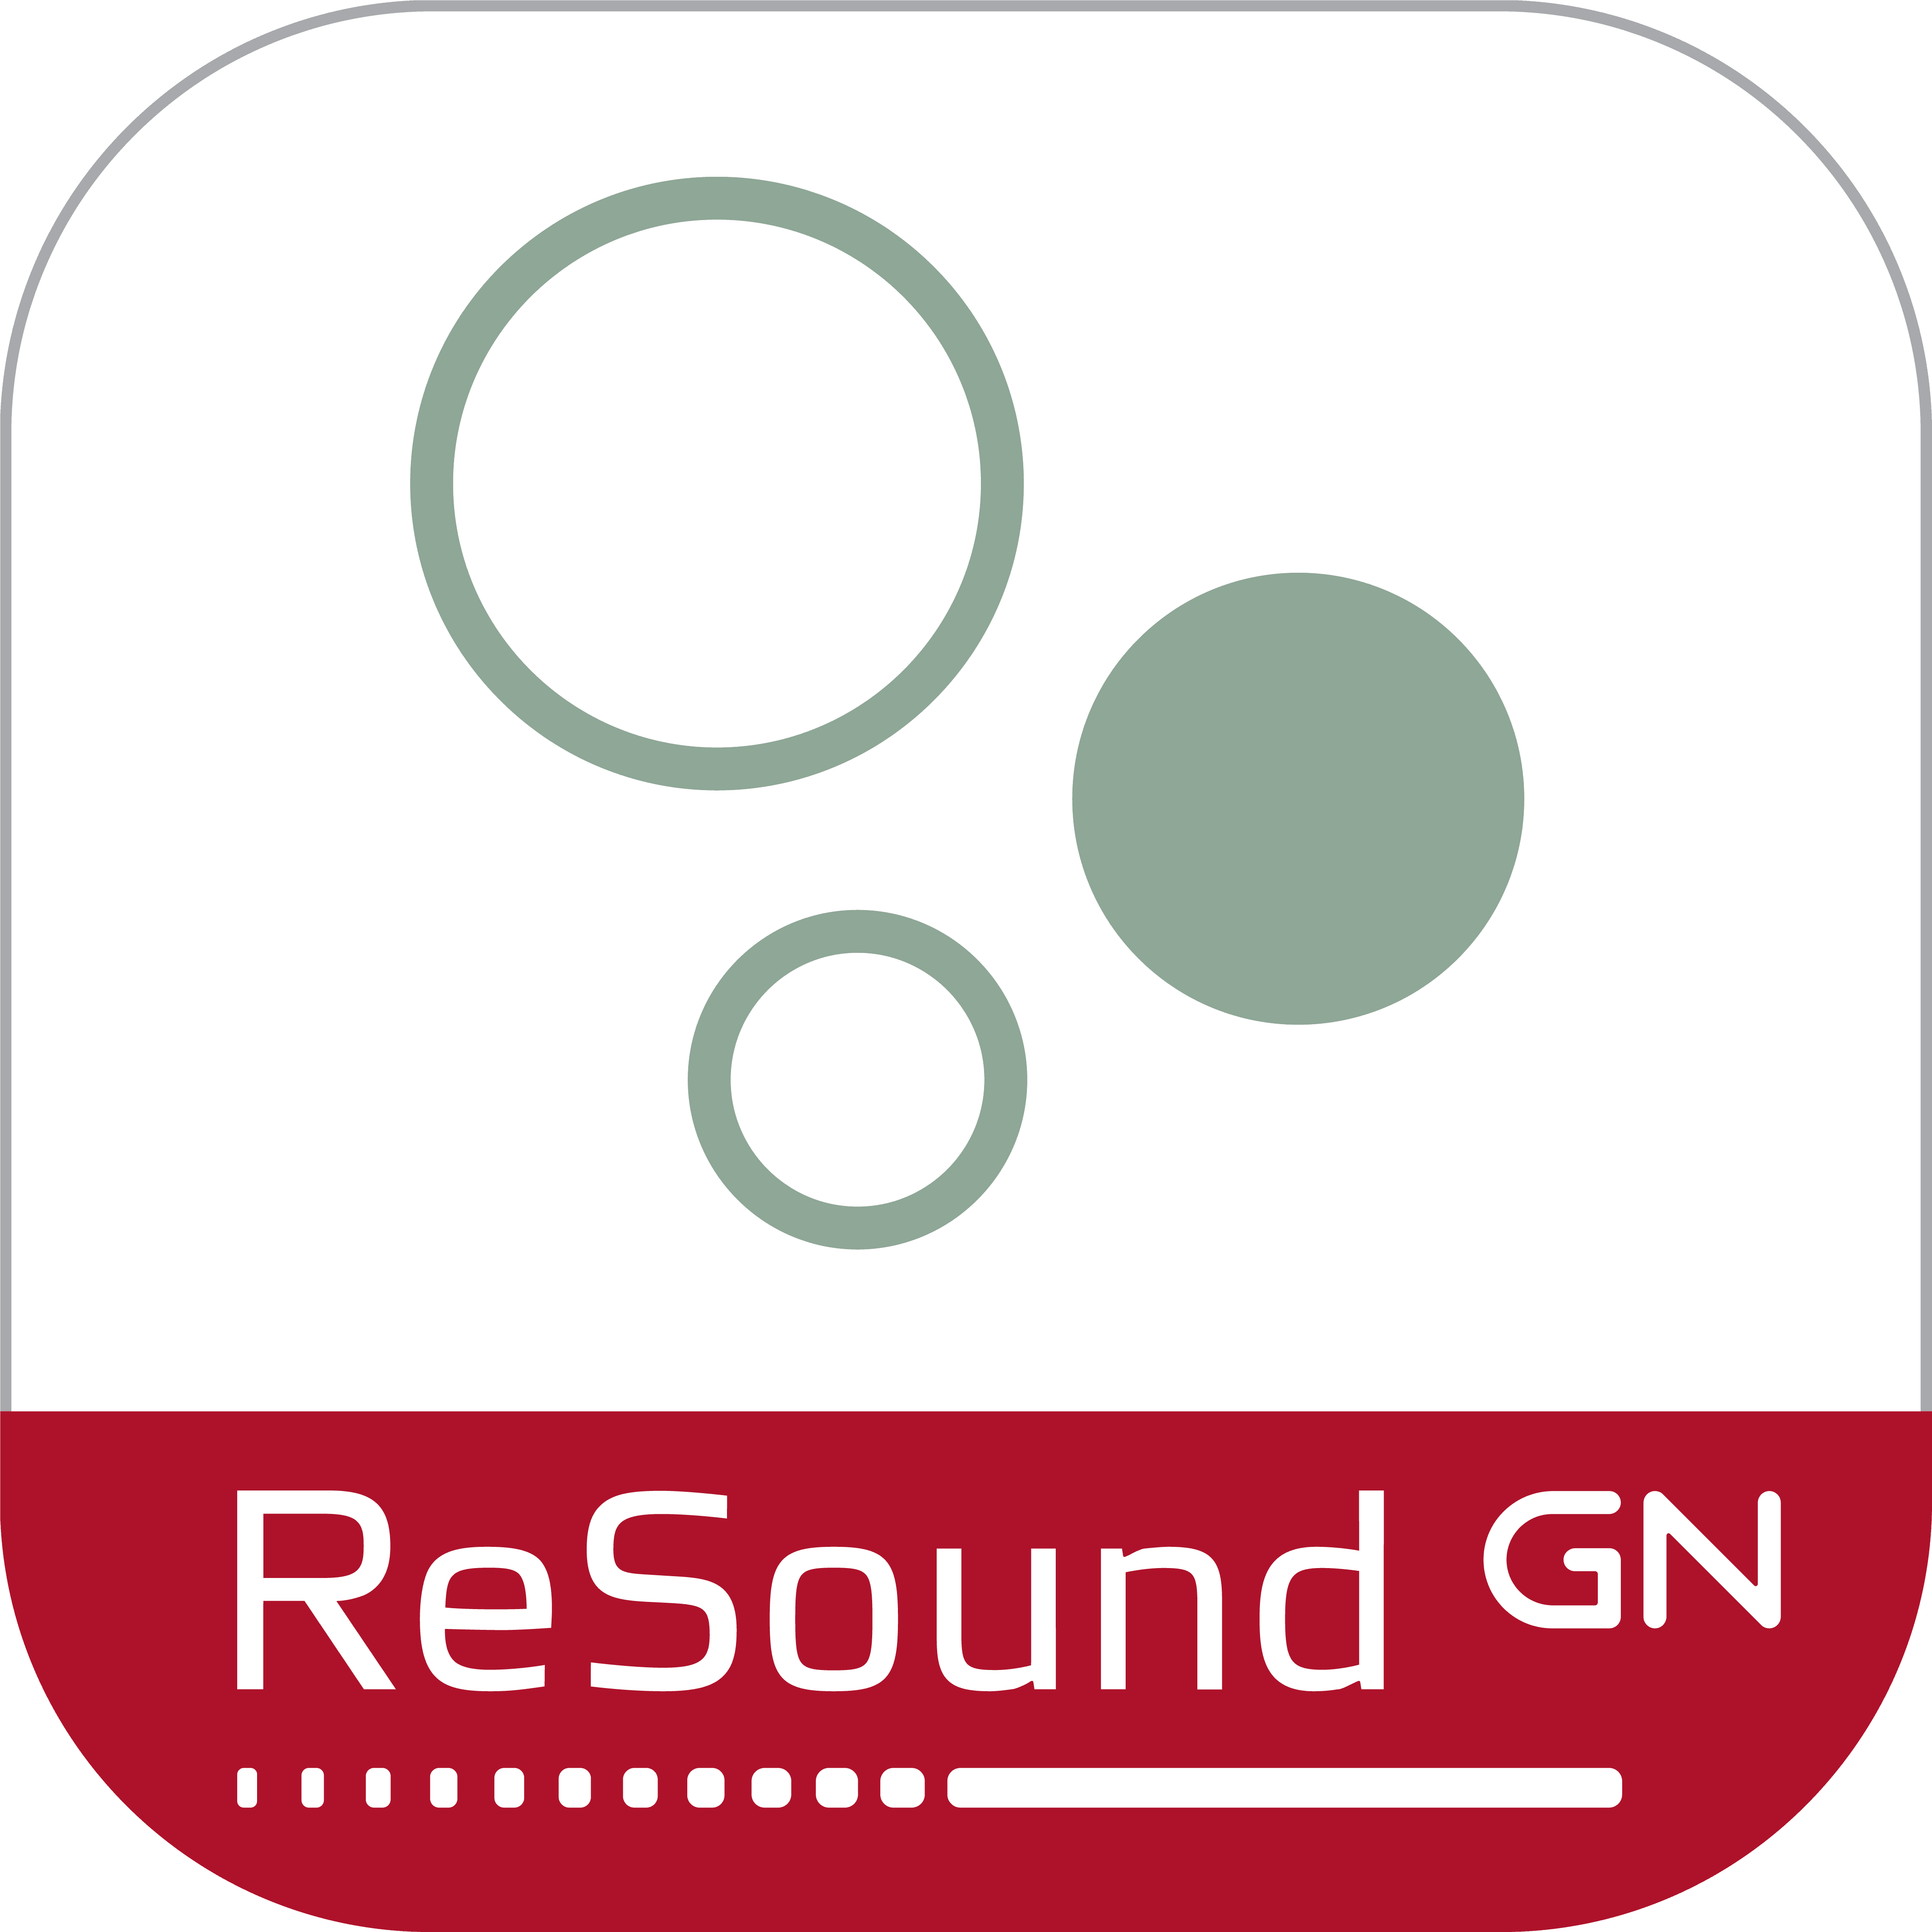 ReSound Relief app icon.